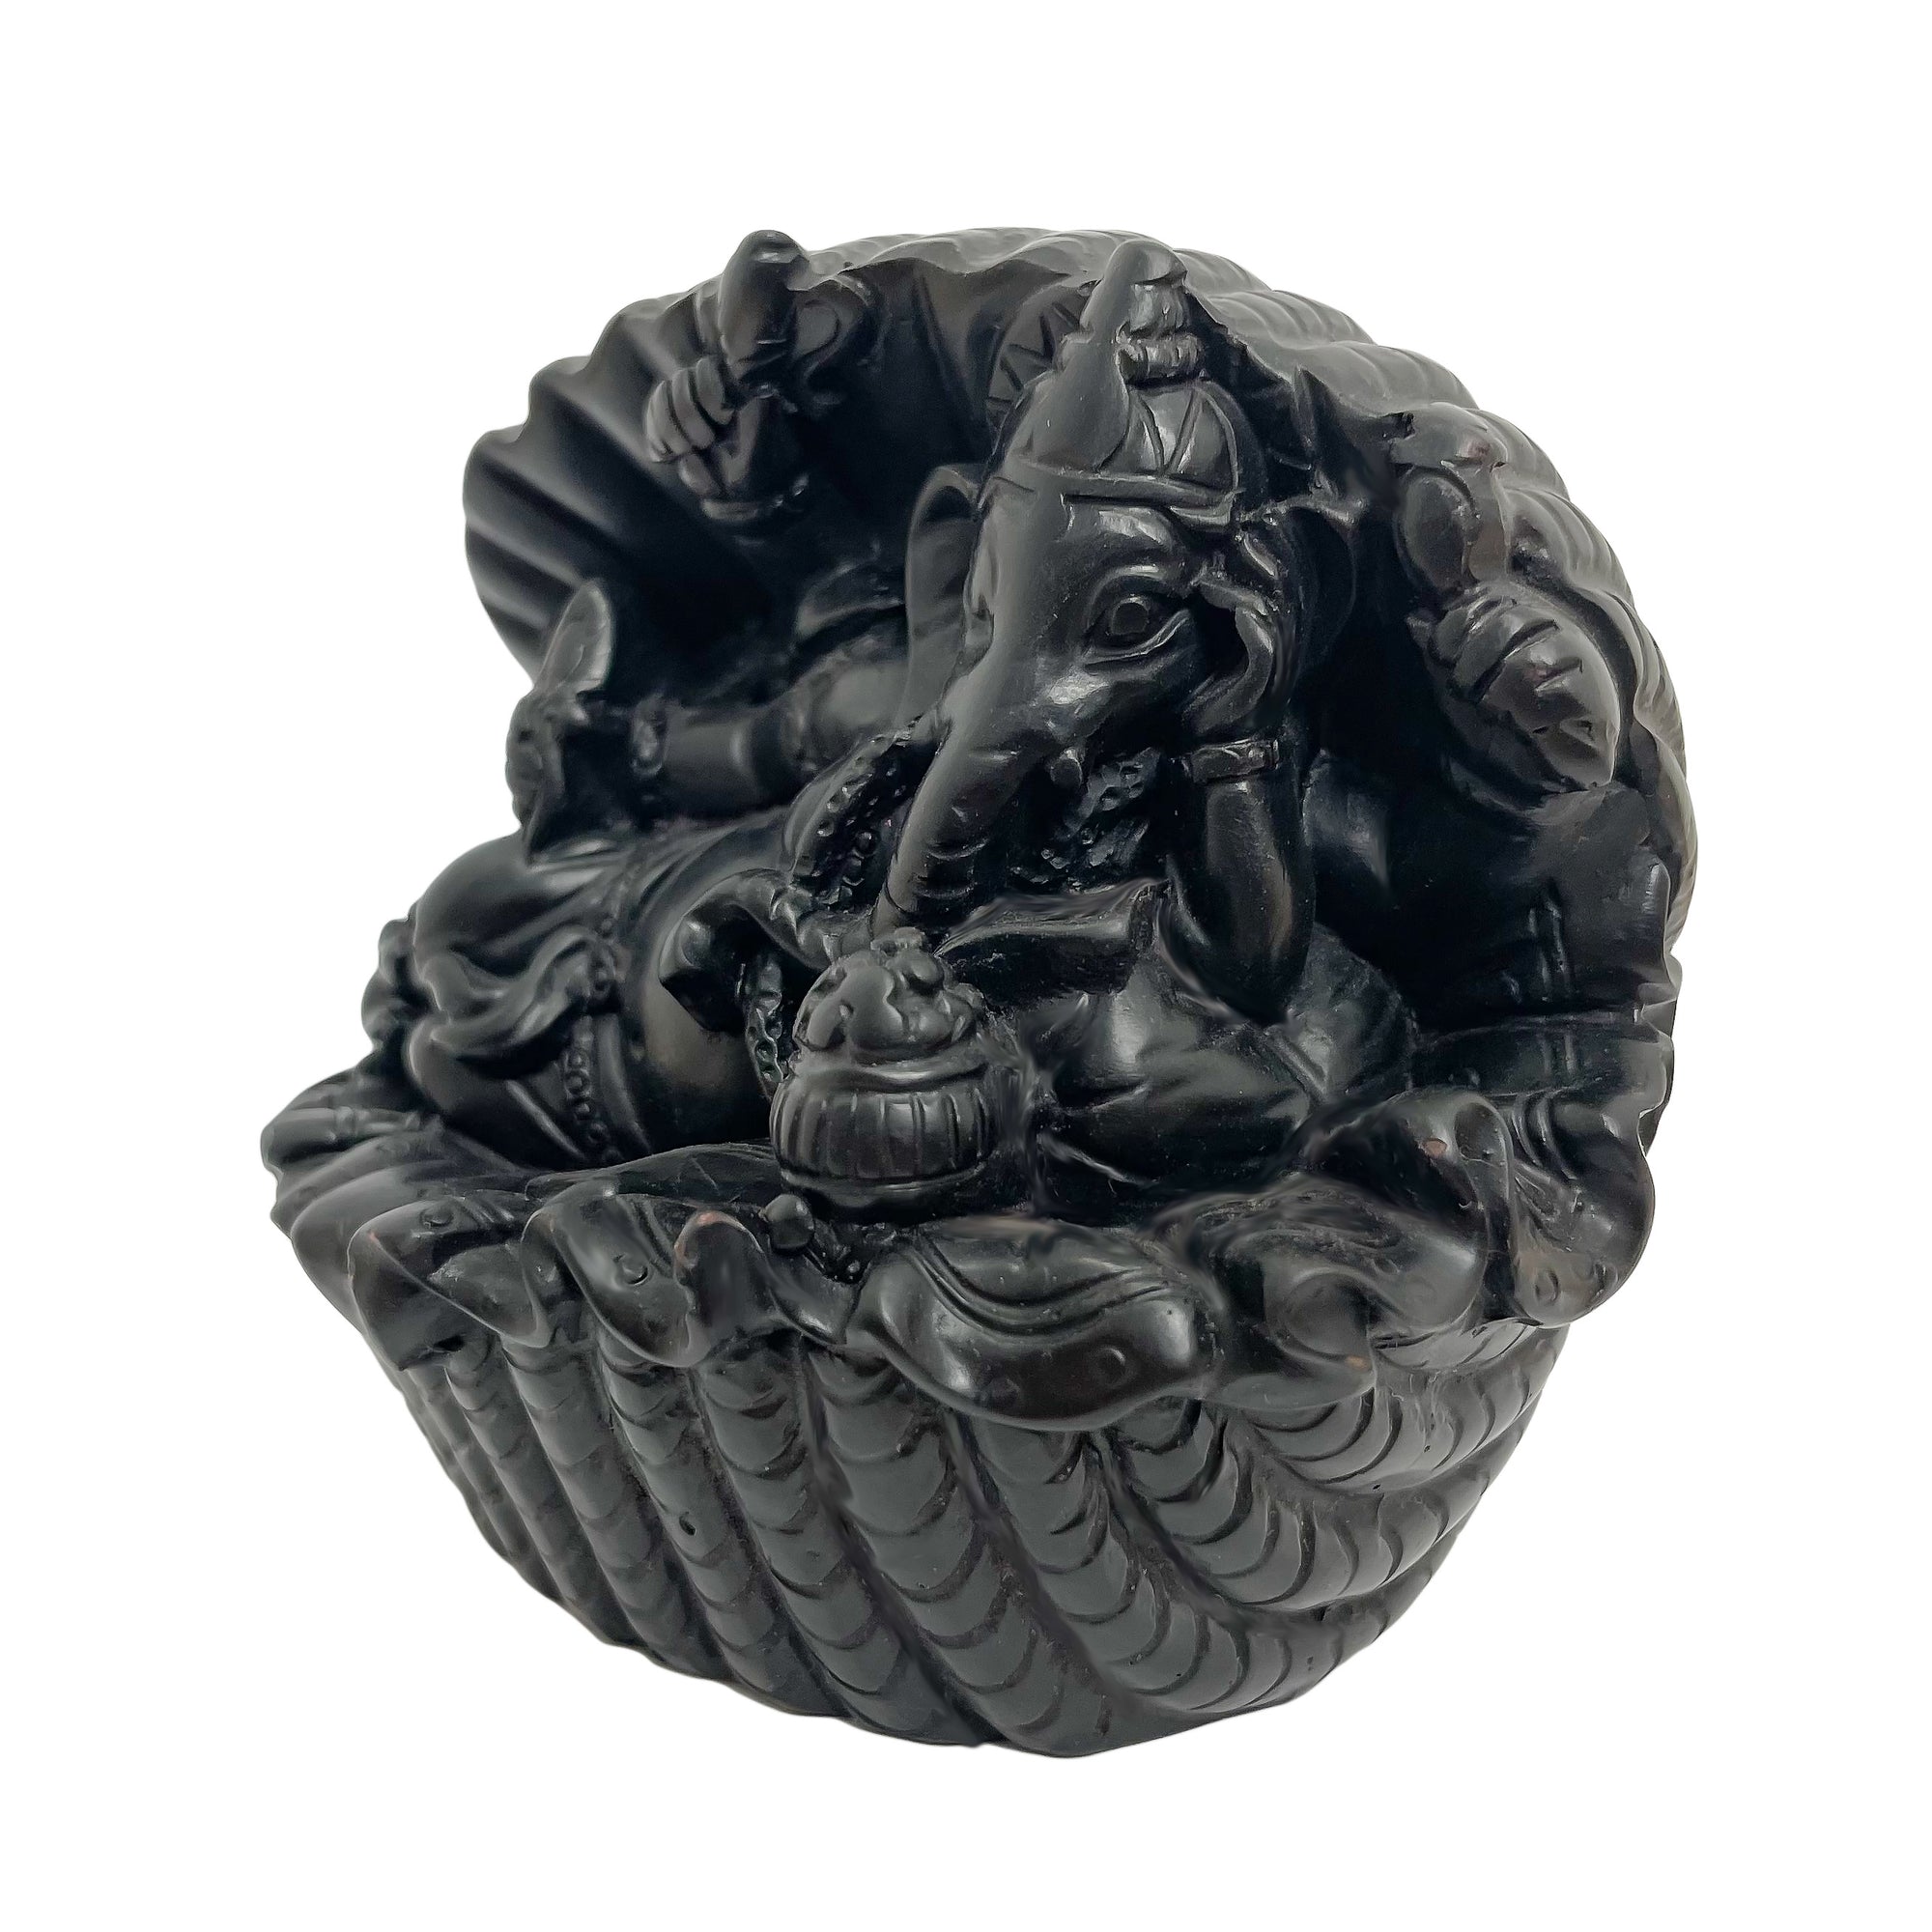 Resting Ganesha Handcast Black Resin Statue